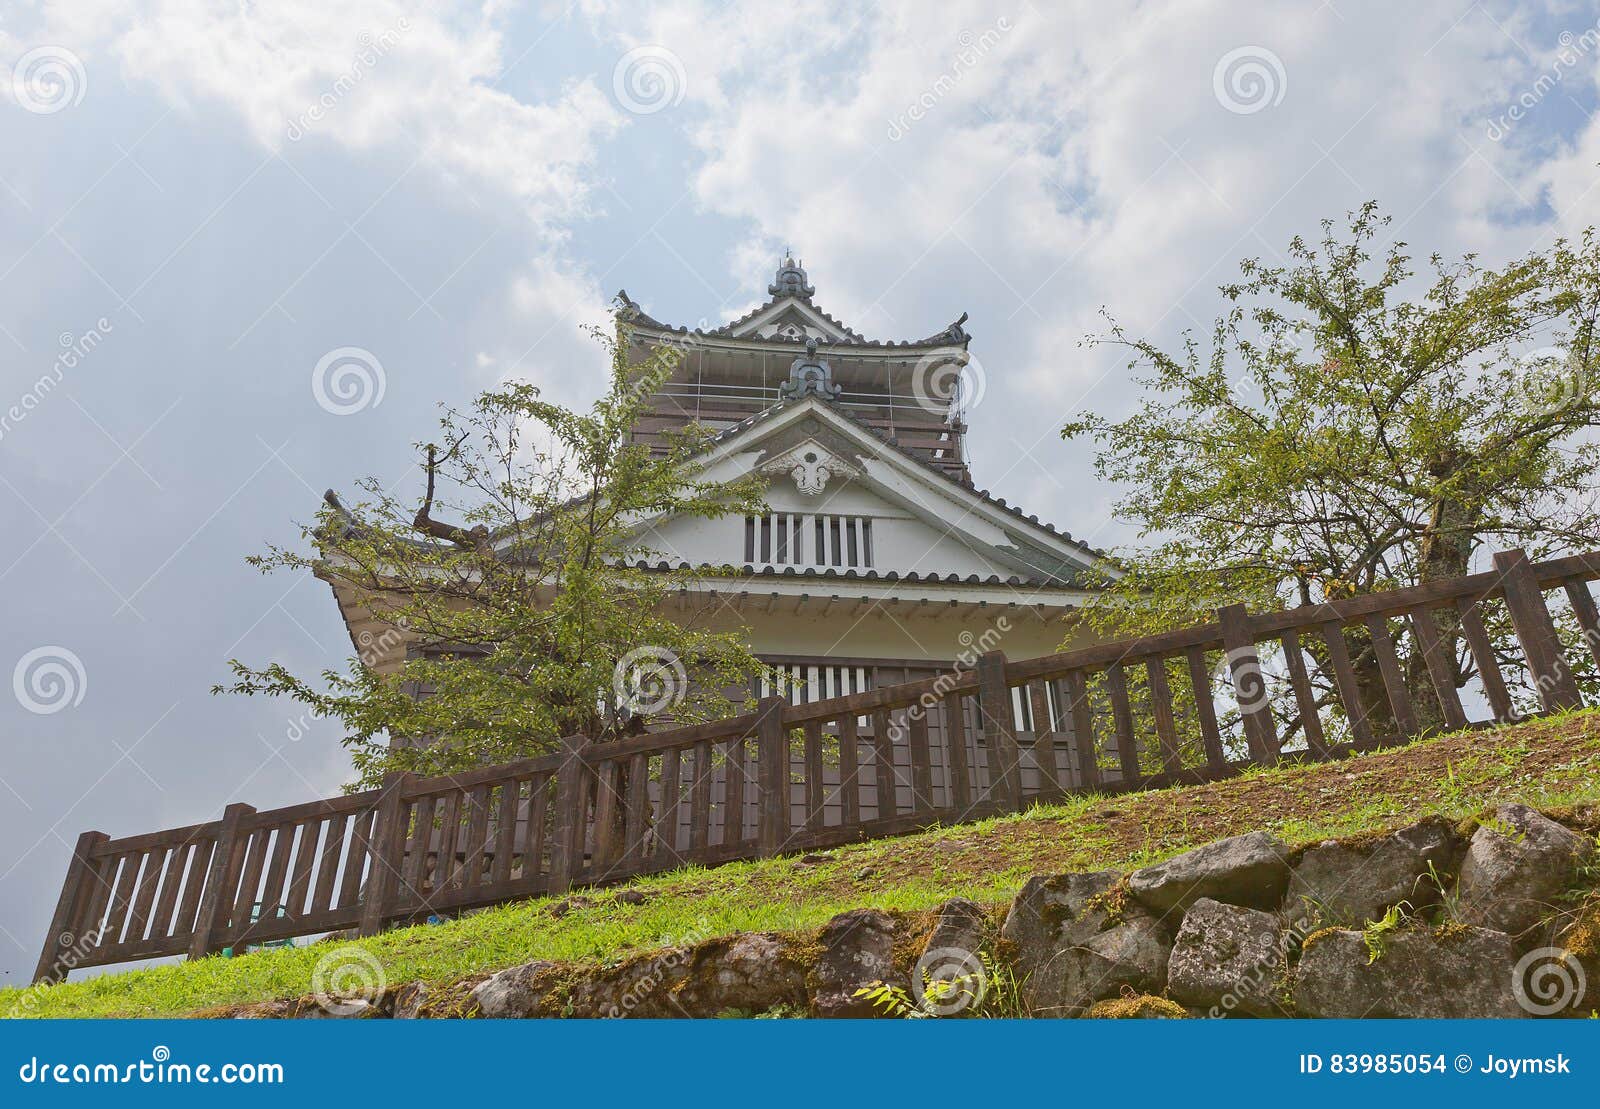 donjon of echizen ohno castle in ohno, japan